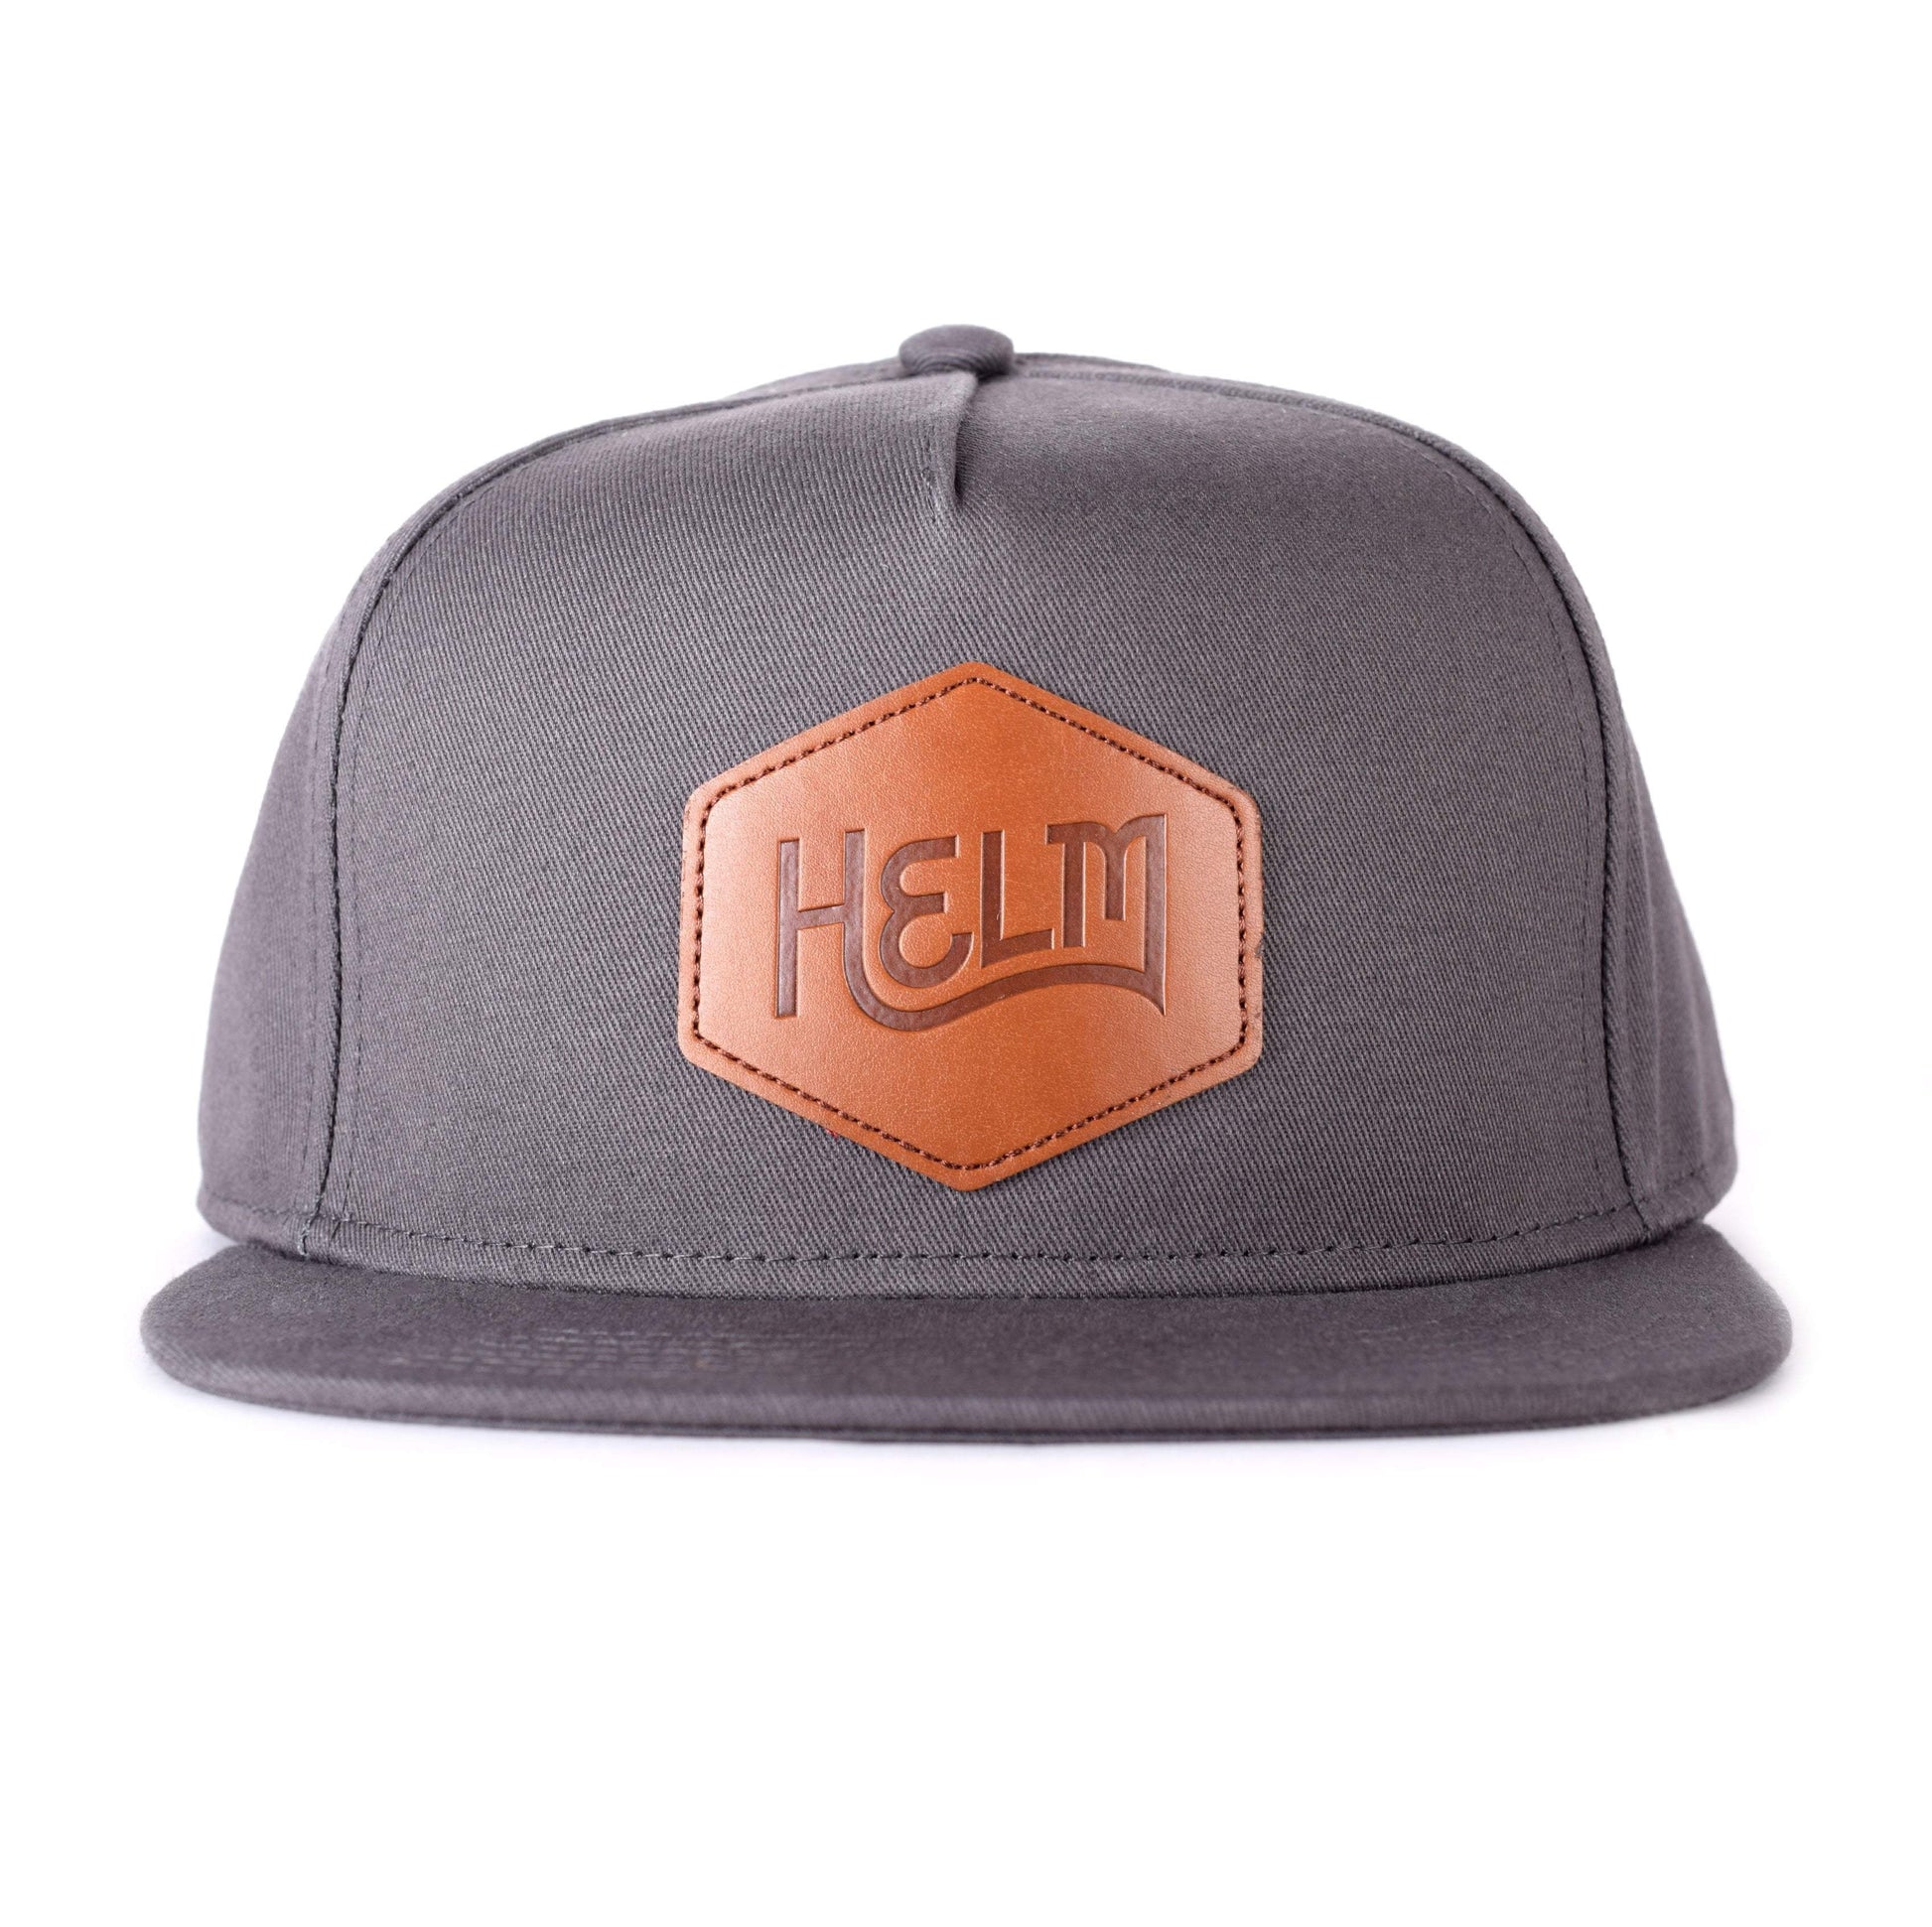 HELM Boots Accessories HELM Logo Cap - Charcoal